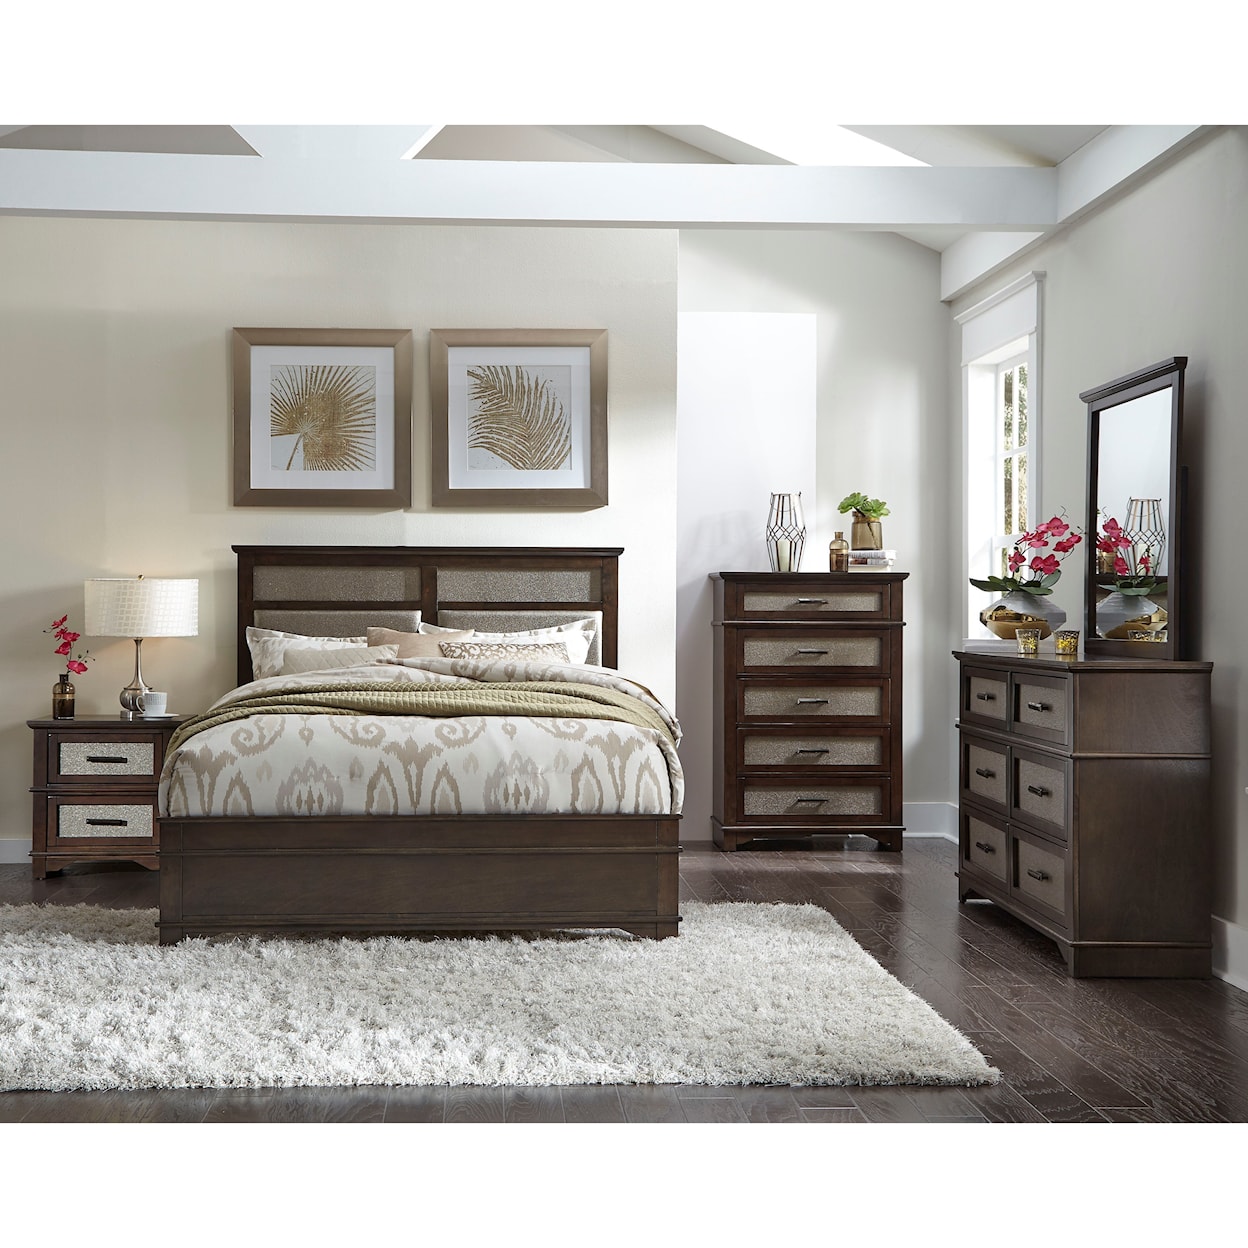 Progressive Furniture Dazzle King Bedroom Group